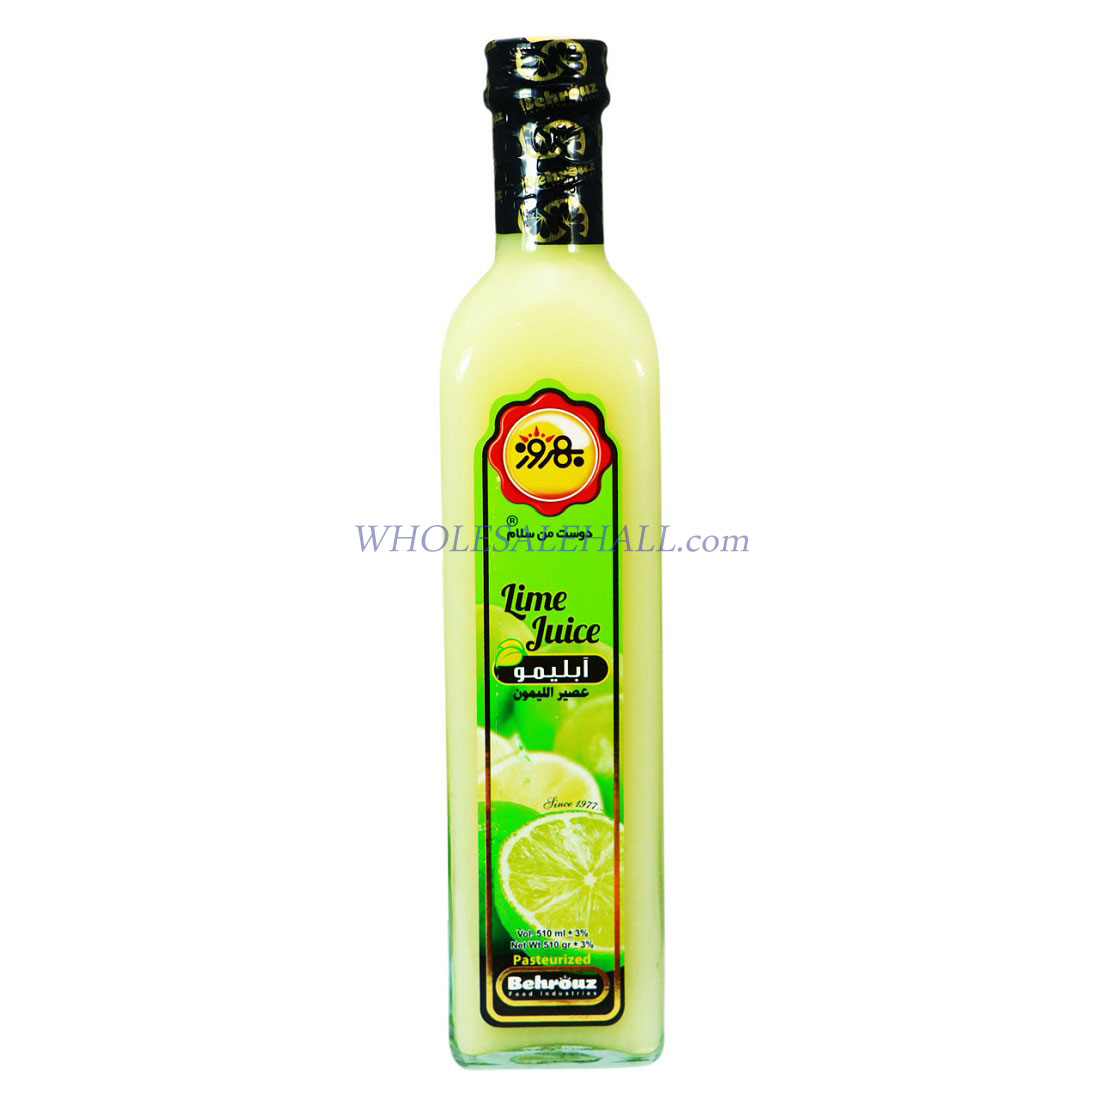 510 grams of Behrouz lemon juice